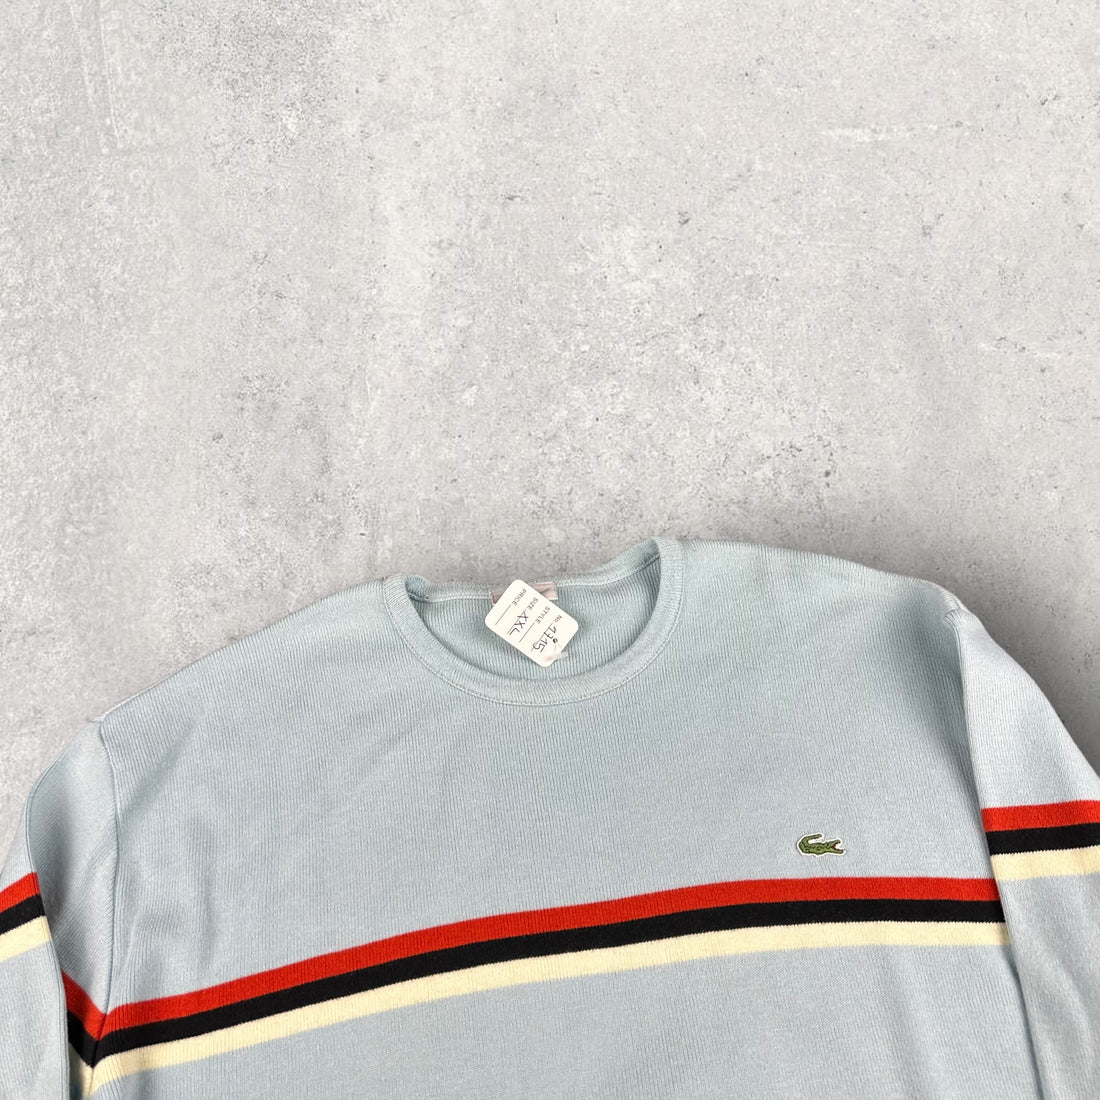 Vintage Lacoste Sweater (XXL)